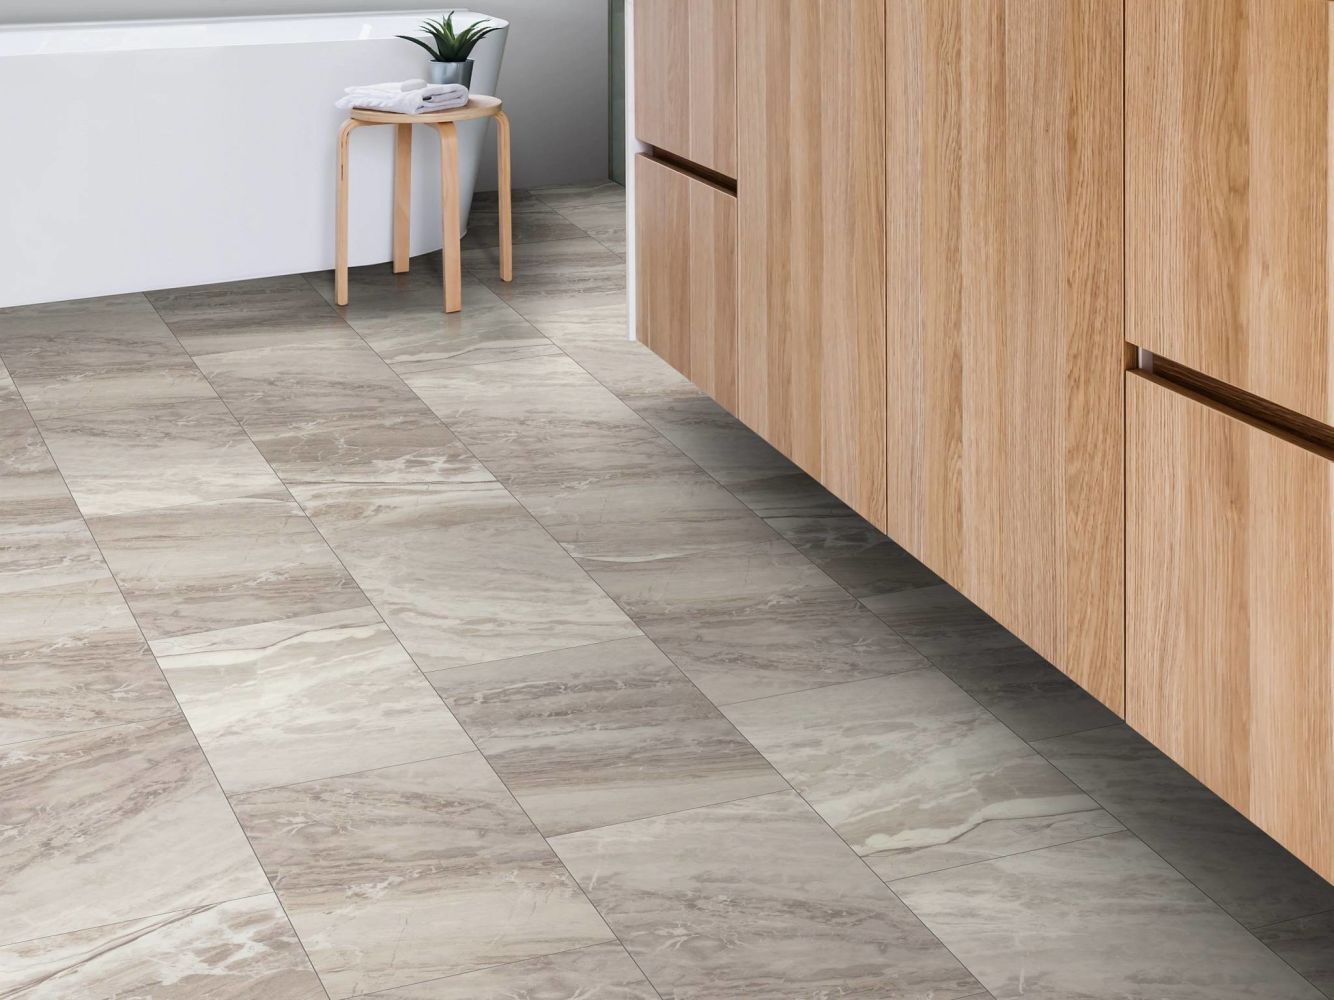 Shaw Floors Cp Colortile Rigid Core Plank And Tile Aspire Tile Milan Grey 01102_CV197